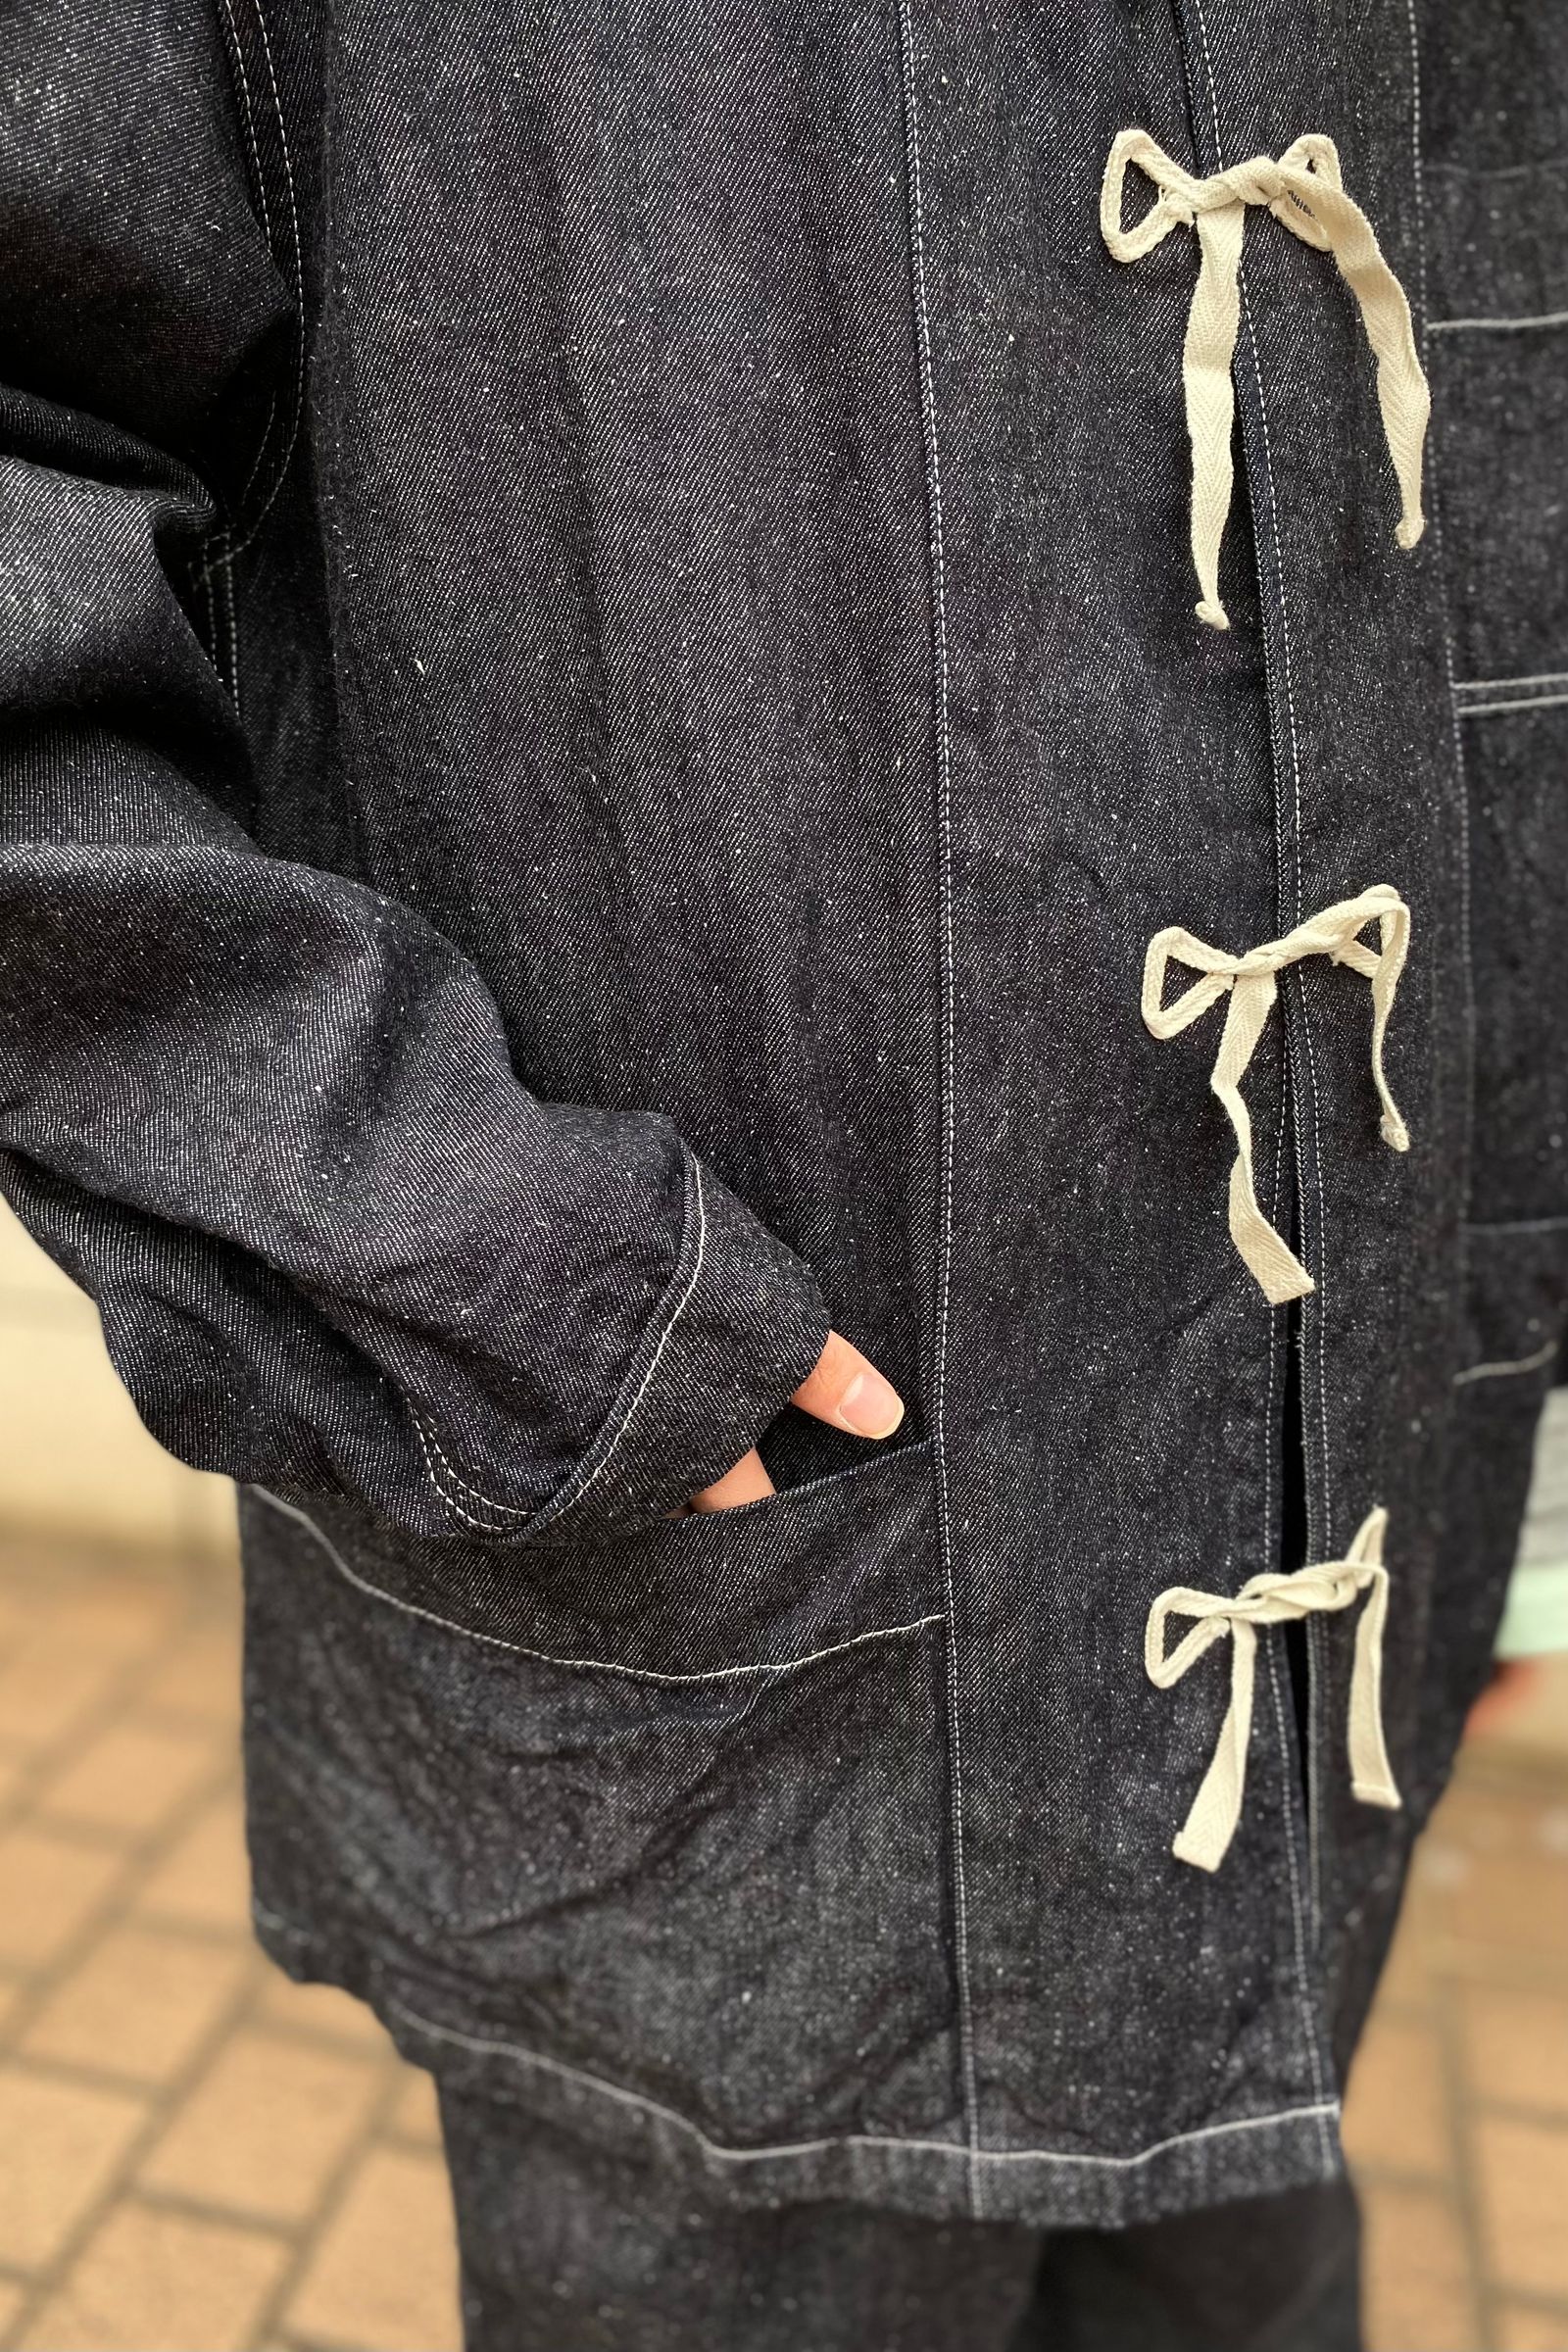 INNAT - silk denim pajama jacket-indigo-23ss | asterisk